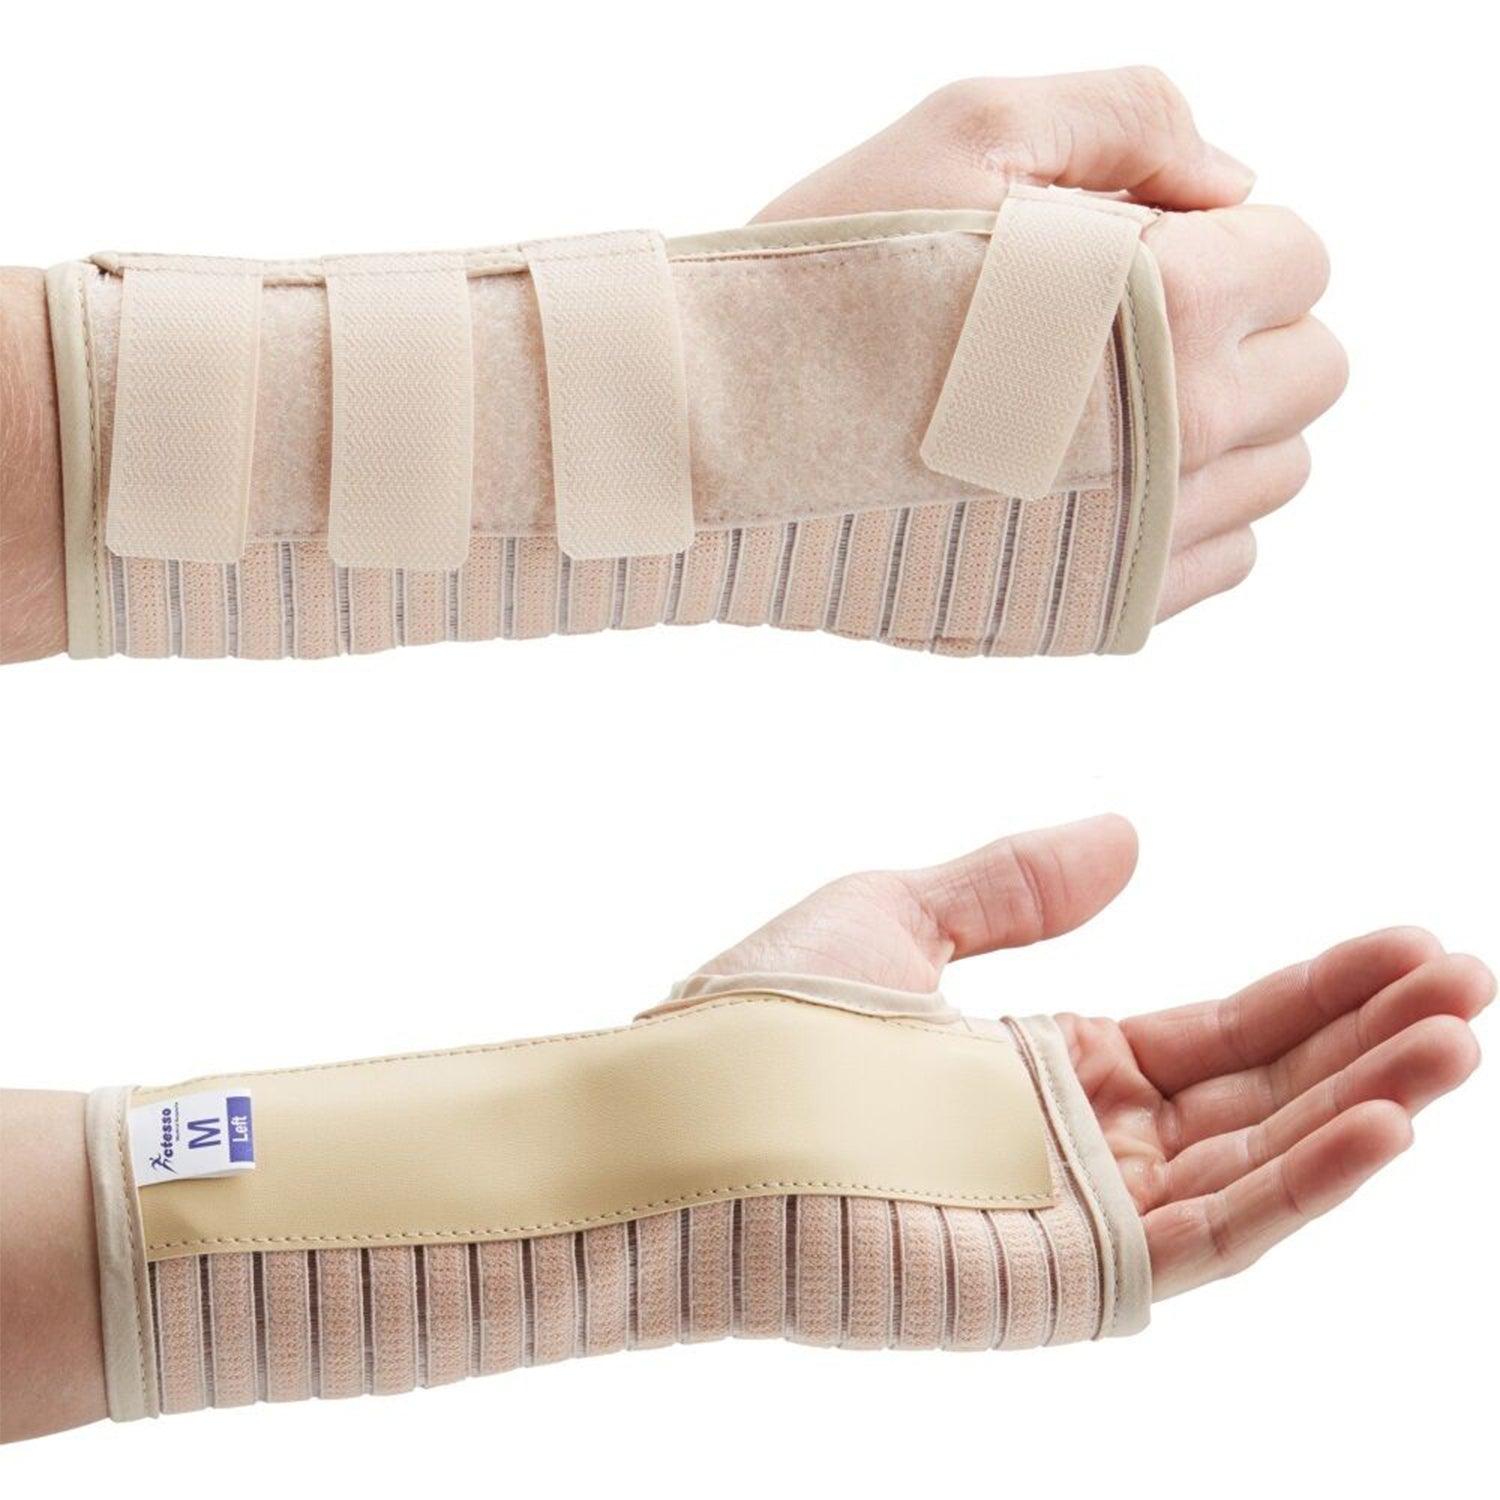 Boots Wrist Brace - Breathable Wrist Support Splint for Sprain Injury Carpal Tunnel Pain